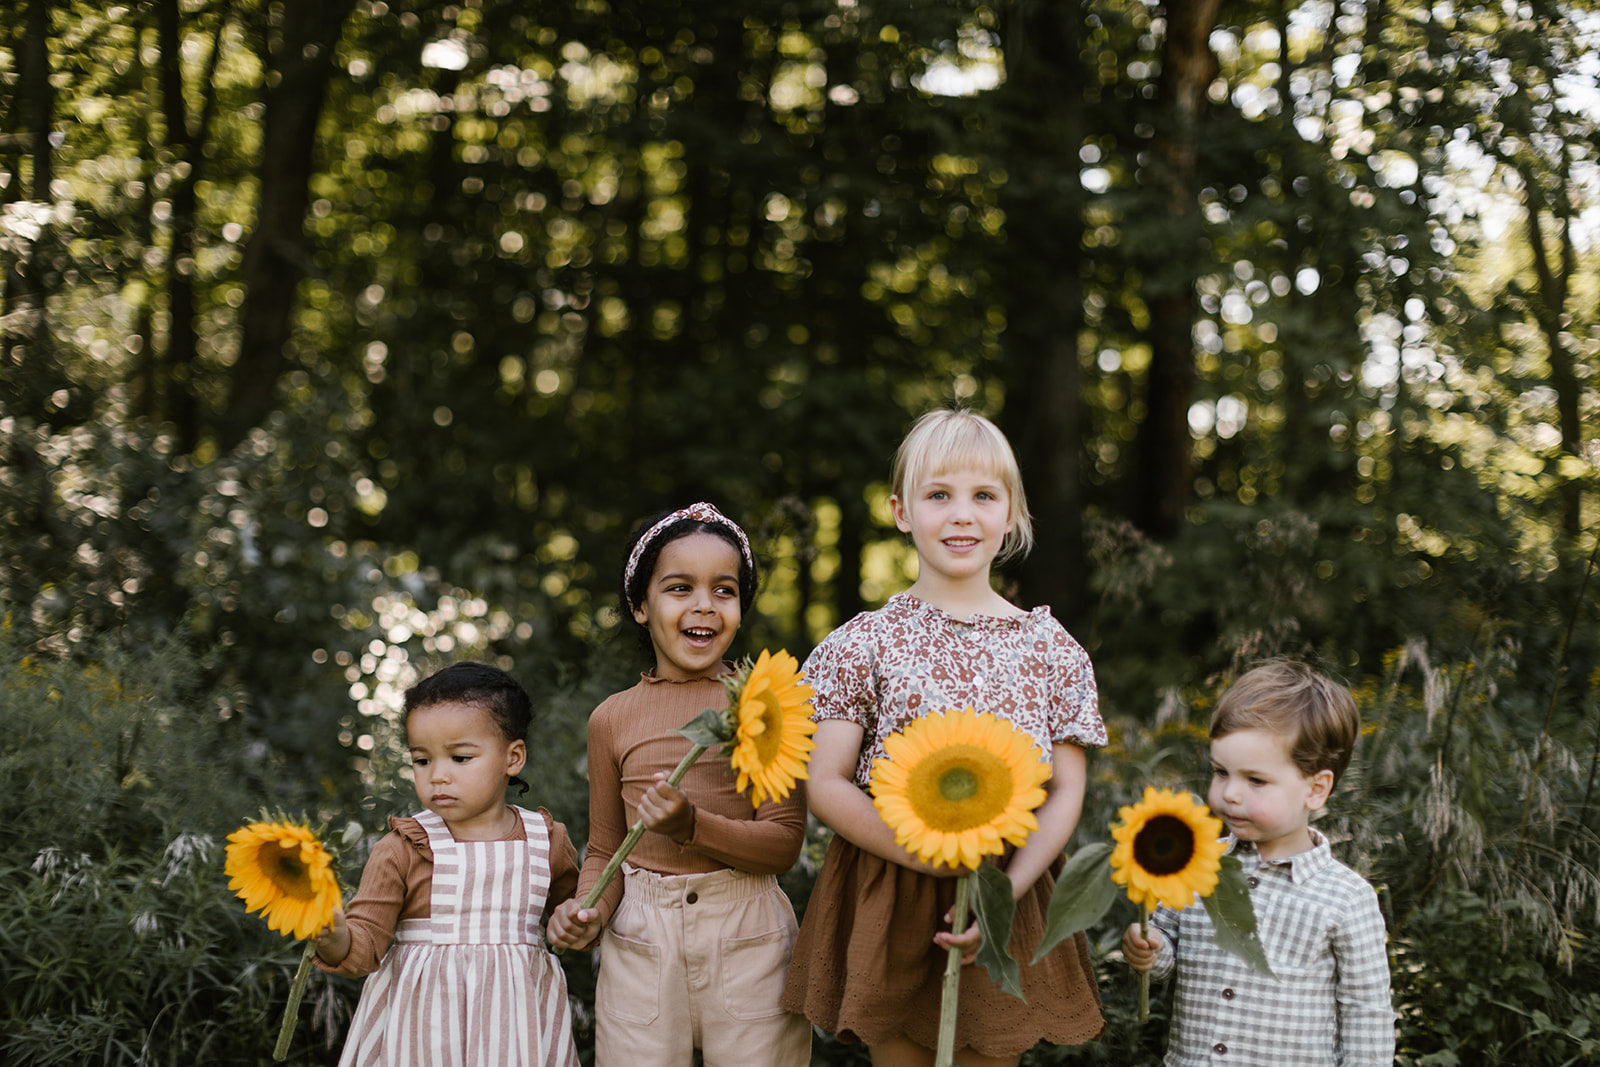 Kids holding sunflowers